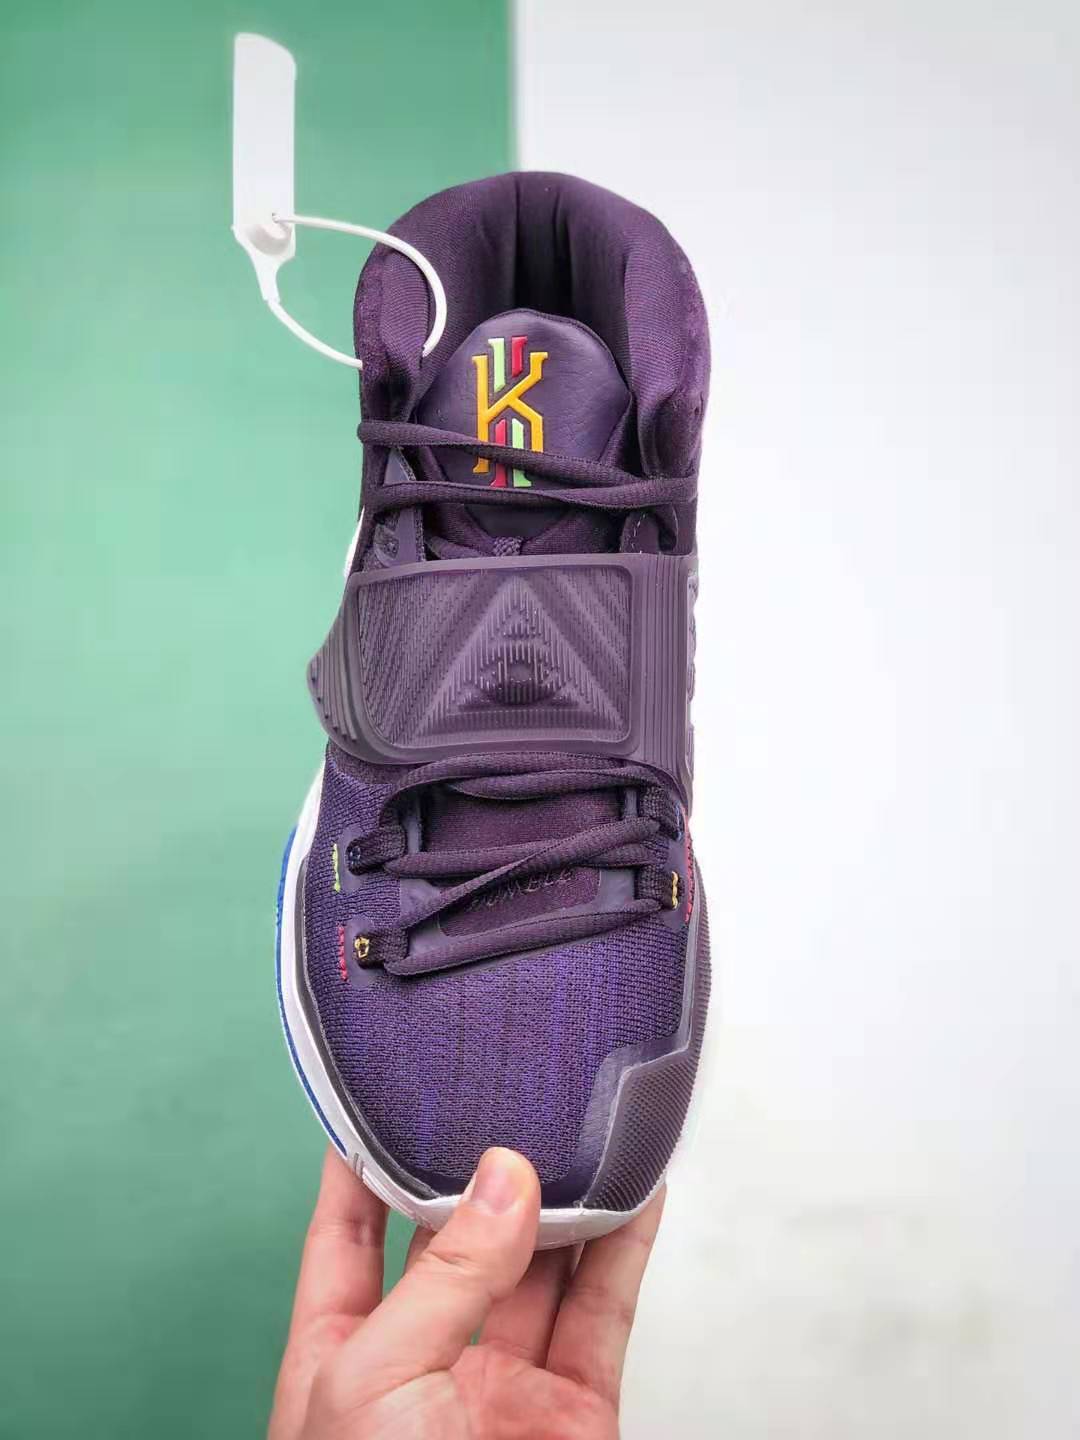 Nike Kyrie 6 Grand Purple BQ4631 500 - Stylish and Performance-Driven Basketball Shoes